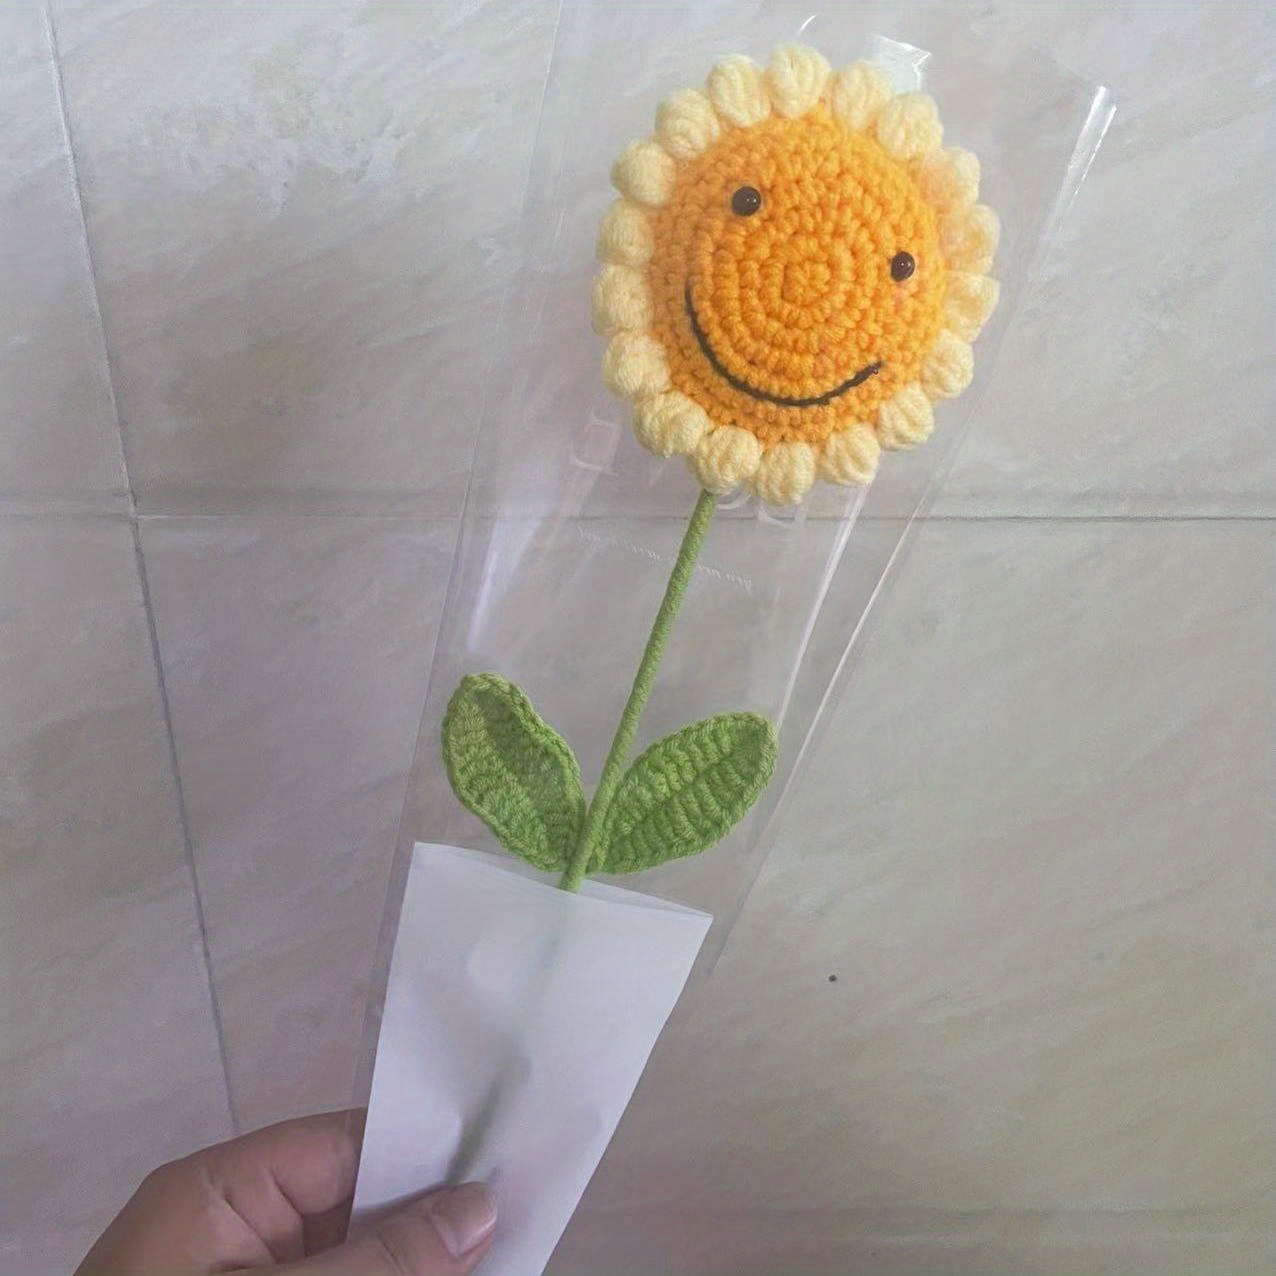 Handmade Flower Bouquet for Wedding Guests Gifts DIY Crochet